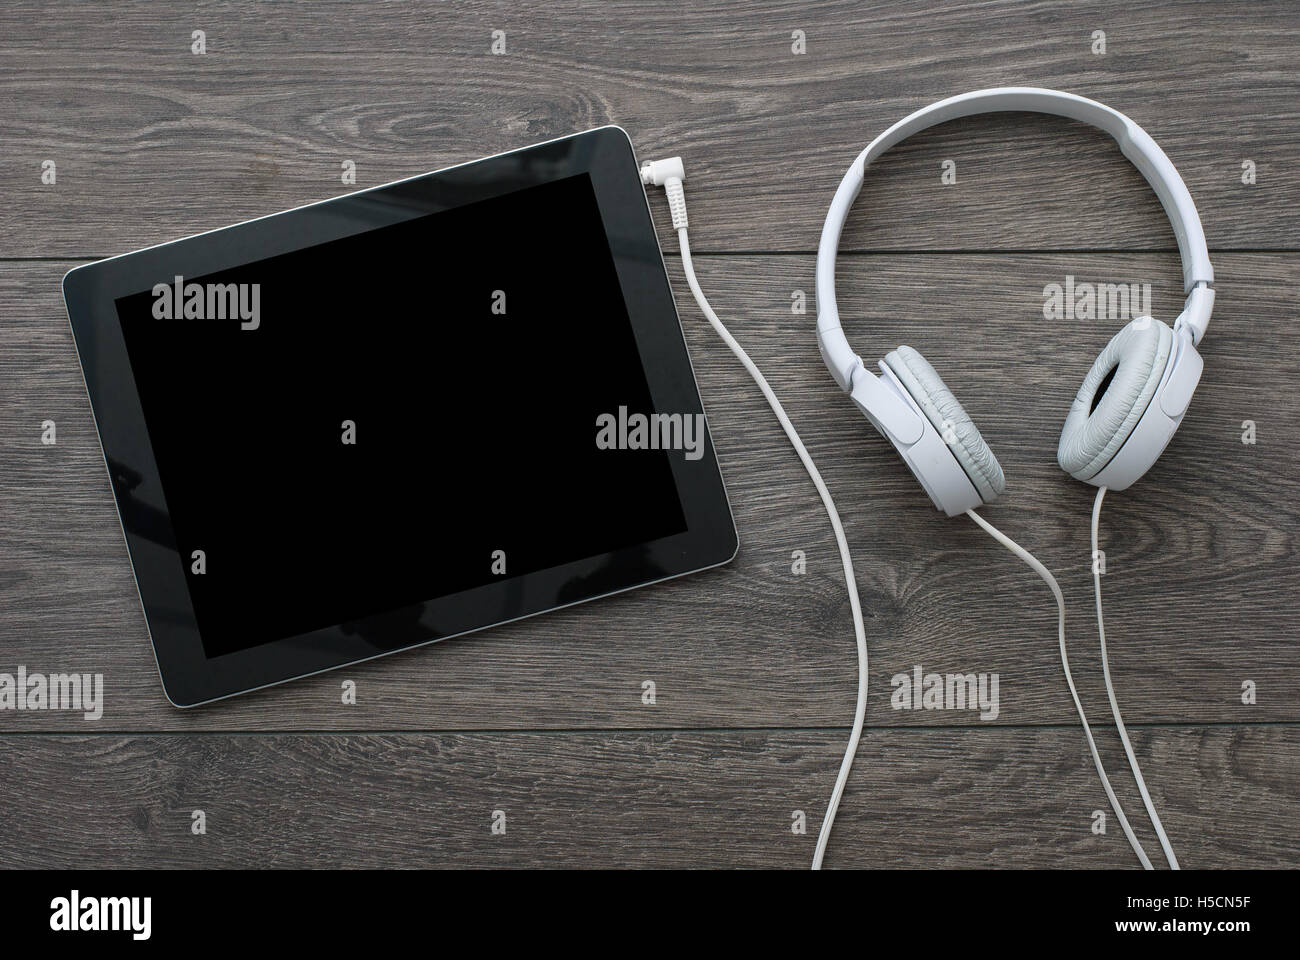 tablet earphones on wooden surface Stock Photo